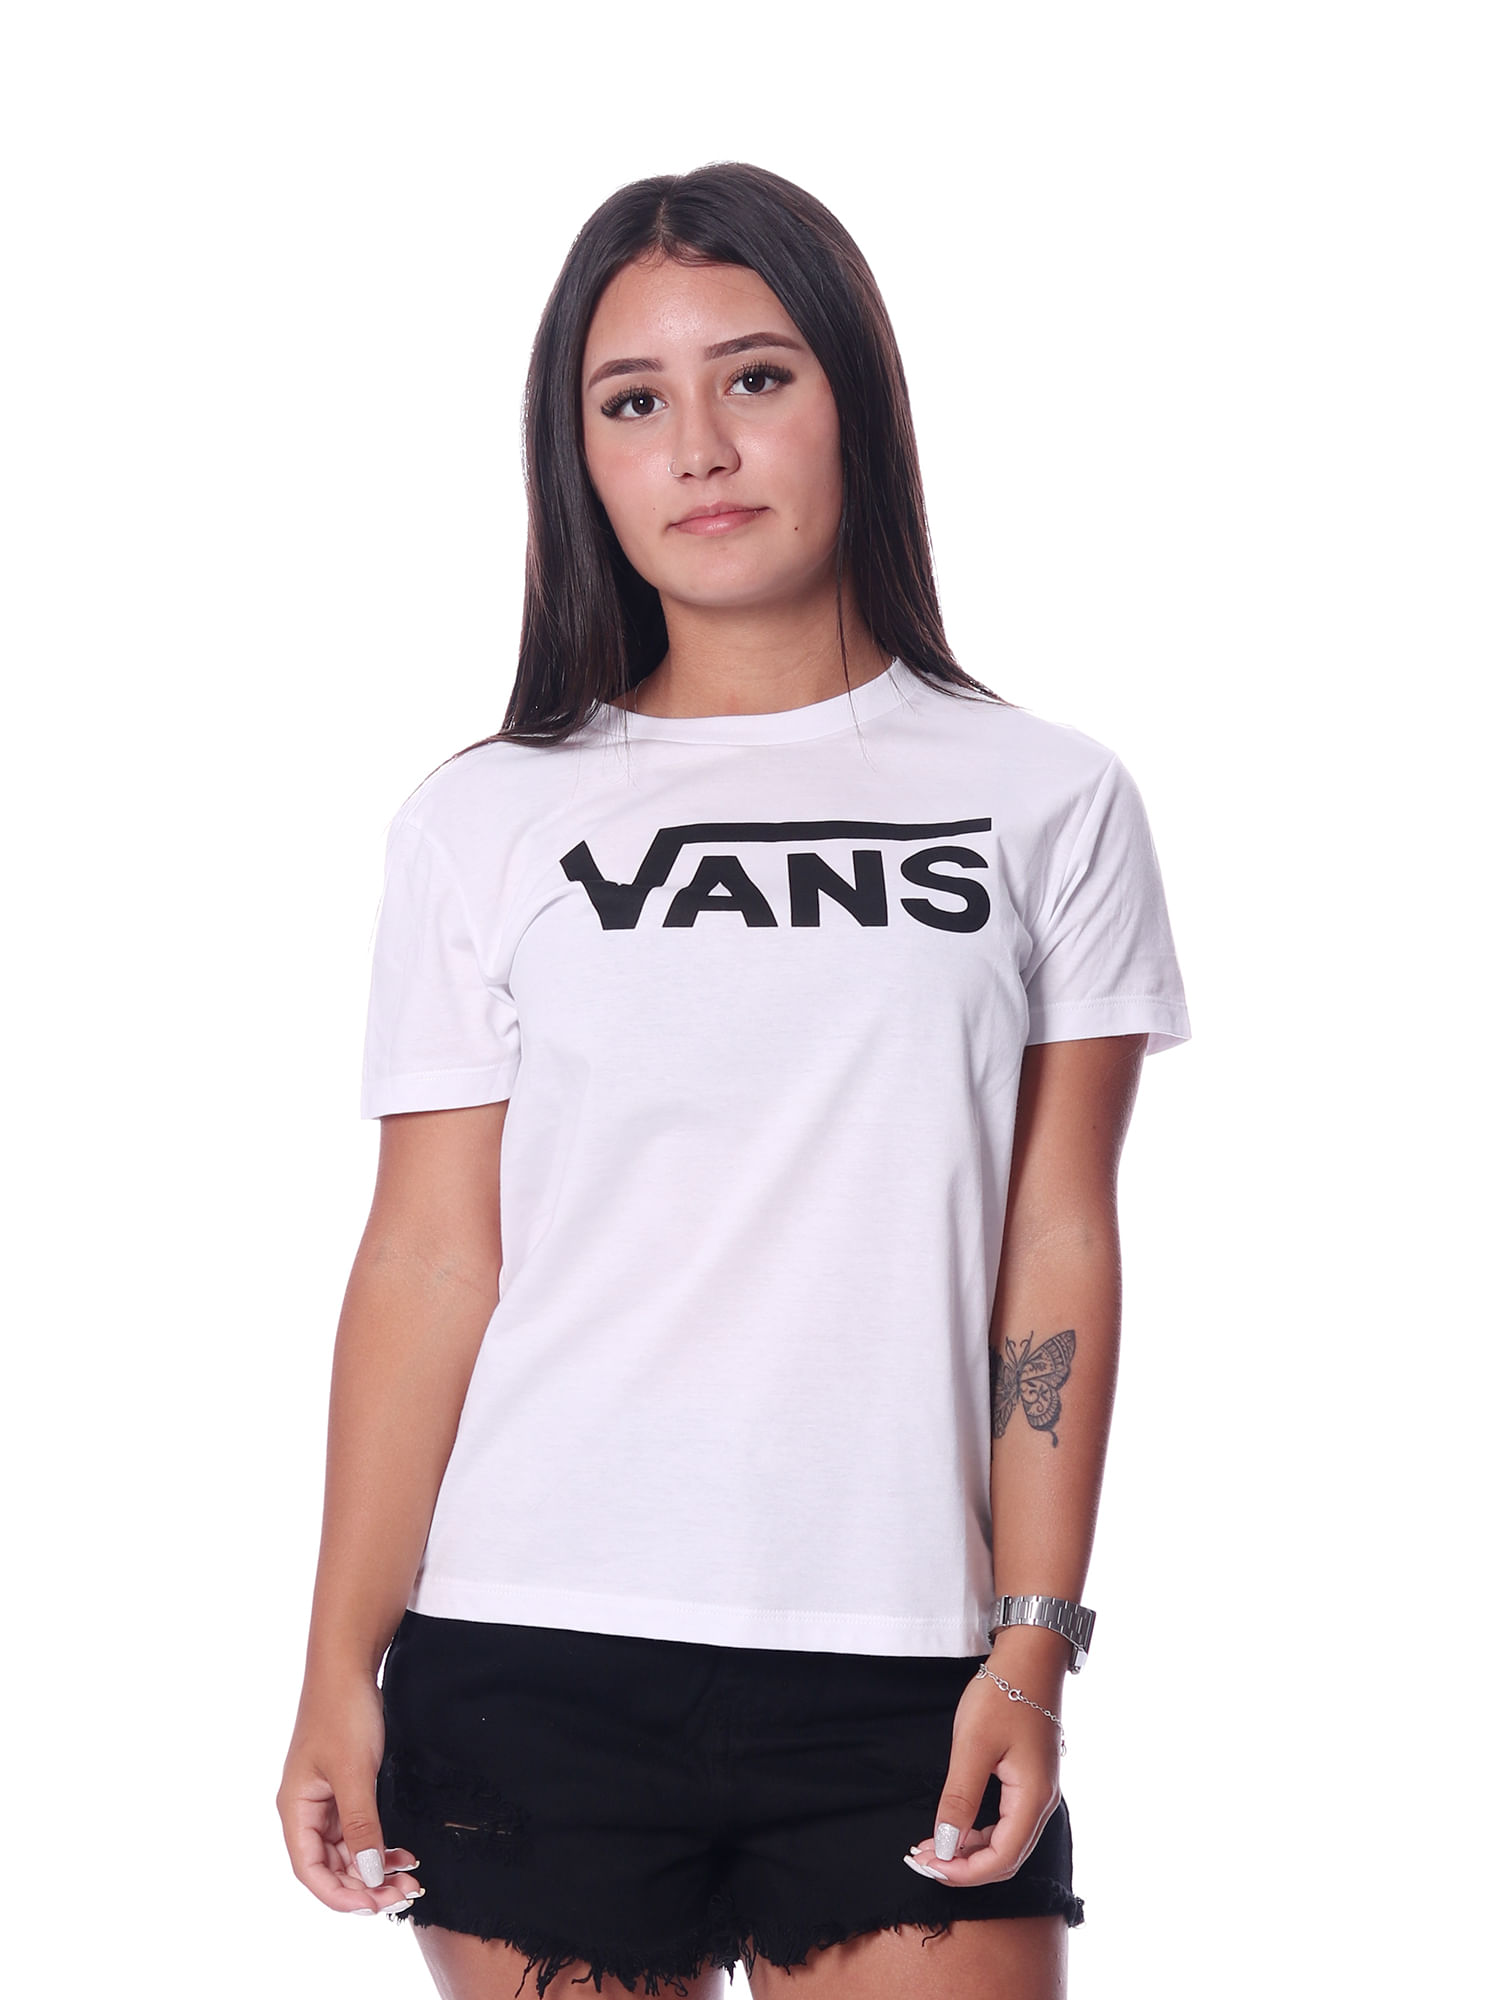 Camiseta-vans-white-White